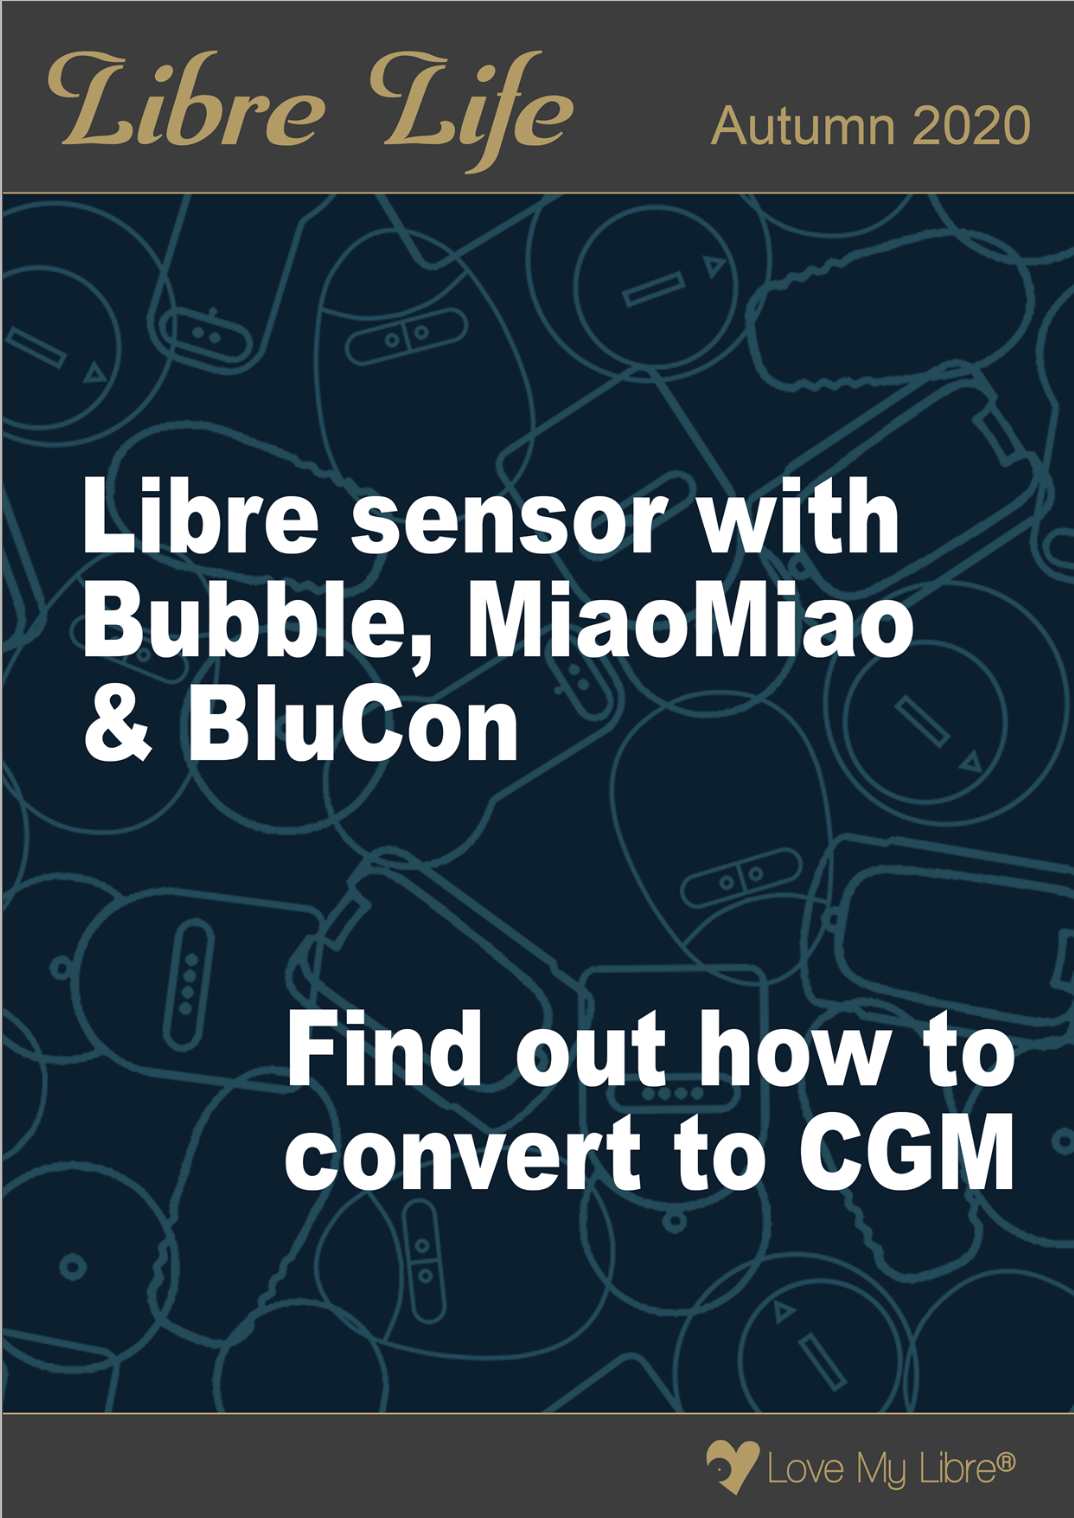 Life Briefing: How to convert a Libre sensor to CGM